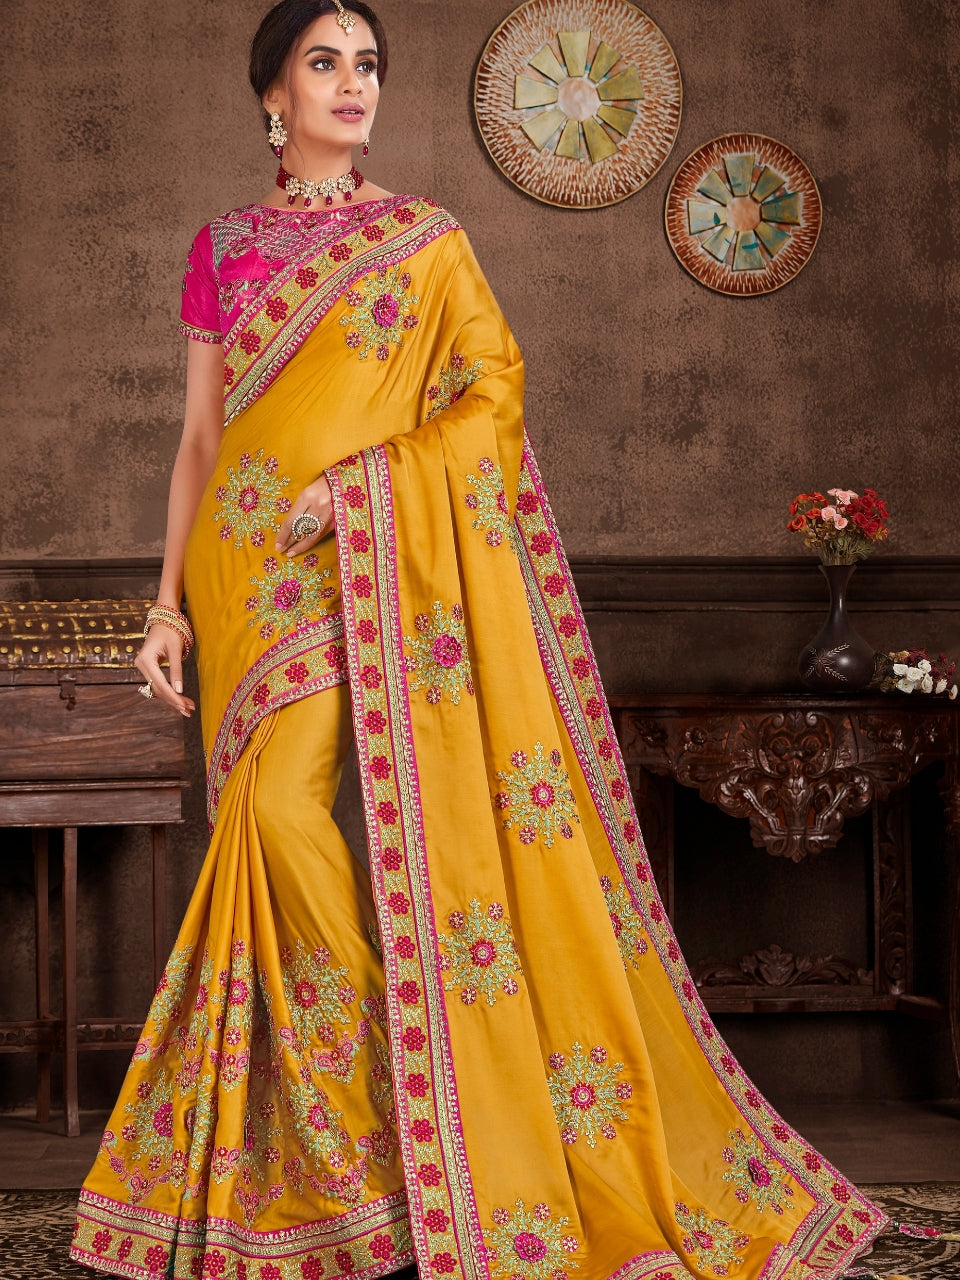 Haldi Function Wear Yellow Silk Saree with Pink Blouse | Online Sales